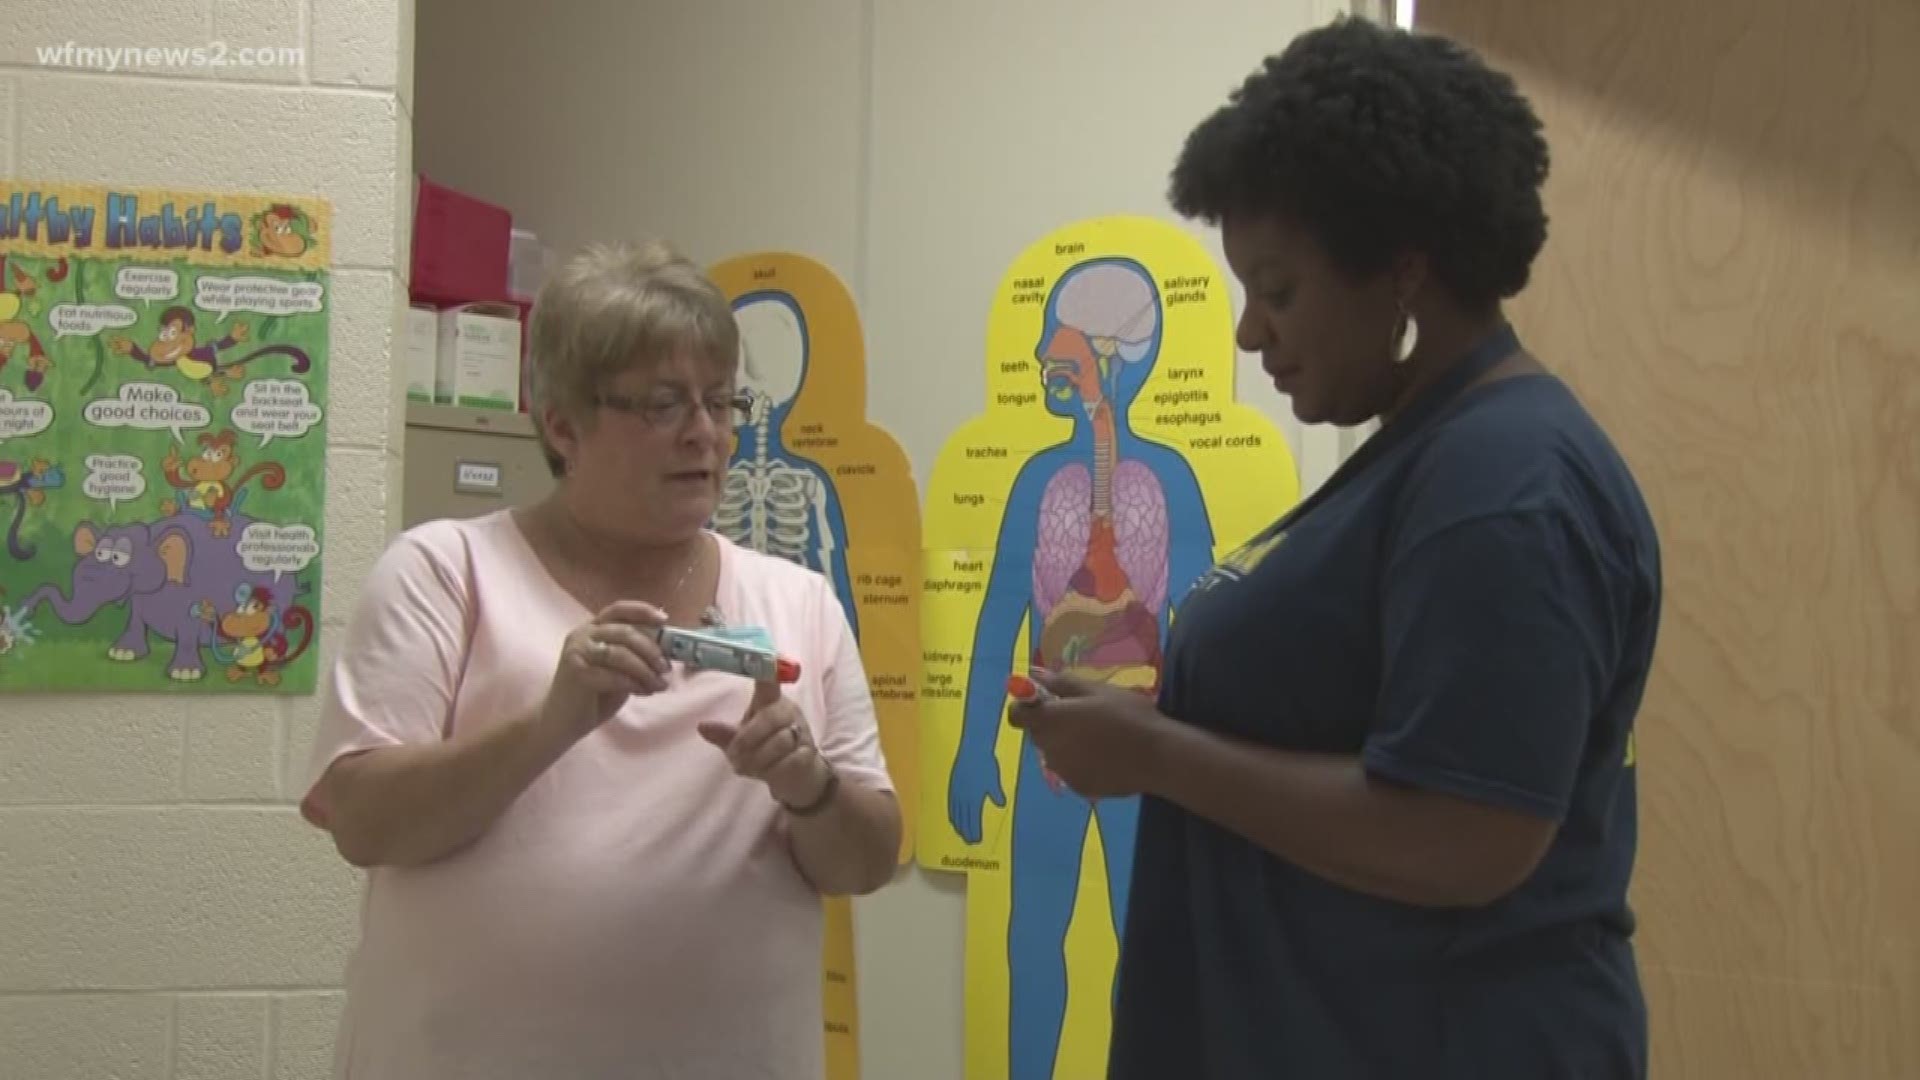 School health leaders say they need to fill school nurse vacancies, some are experiencing shortages.